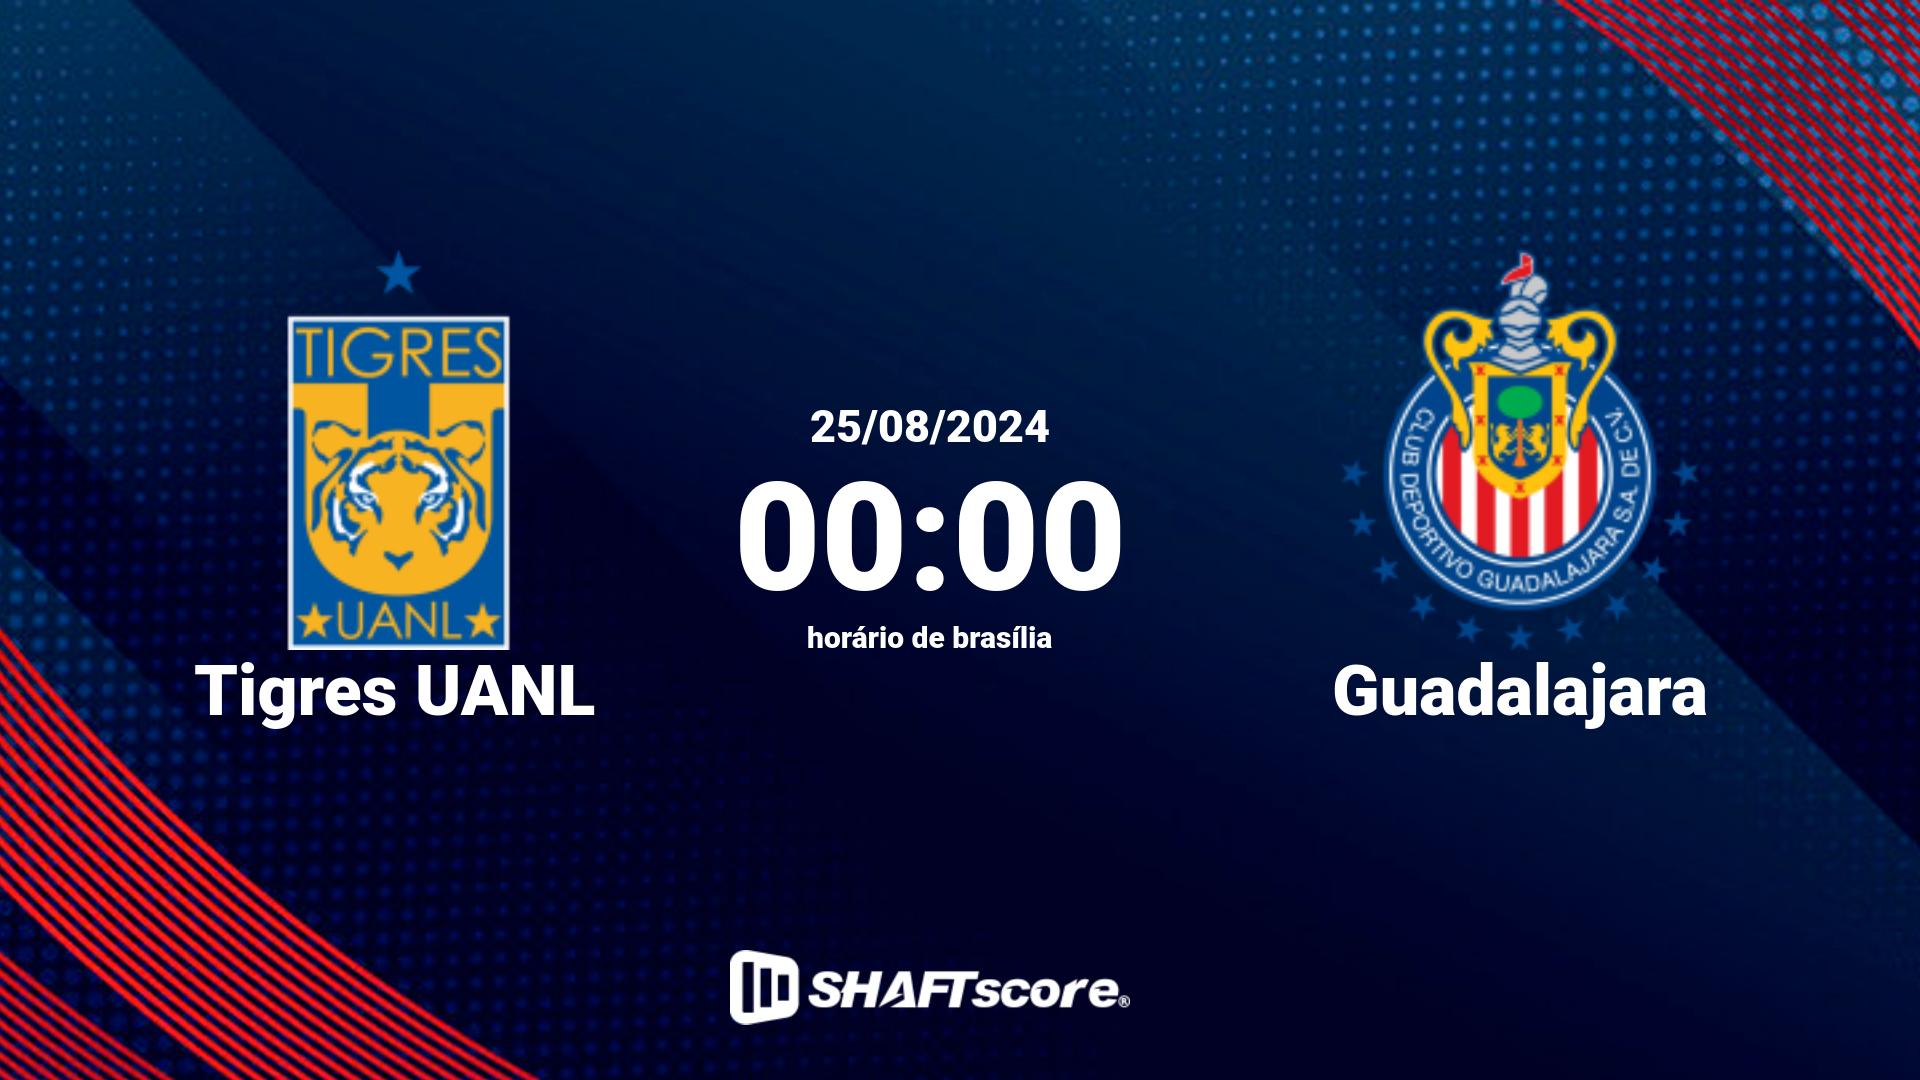 Estatísticas do jogo Tigres UANL vs Guadalajara 25.08 00:00